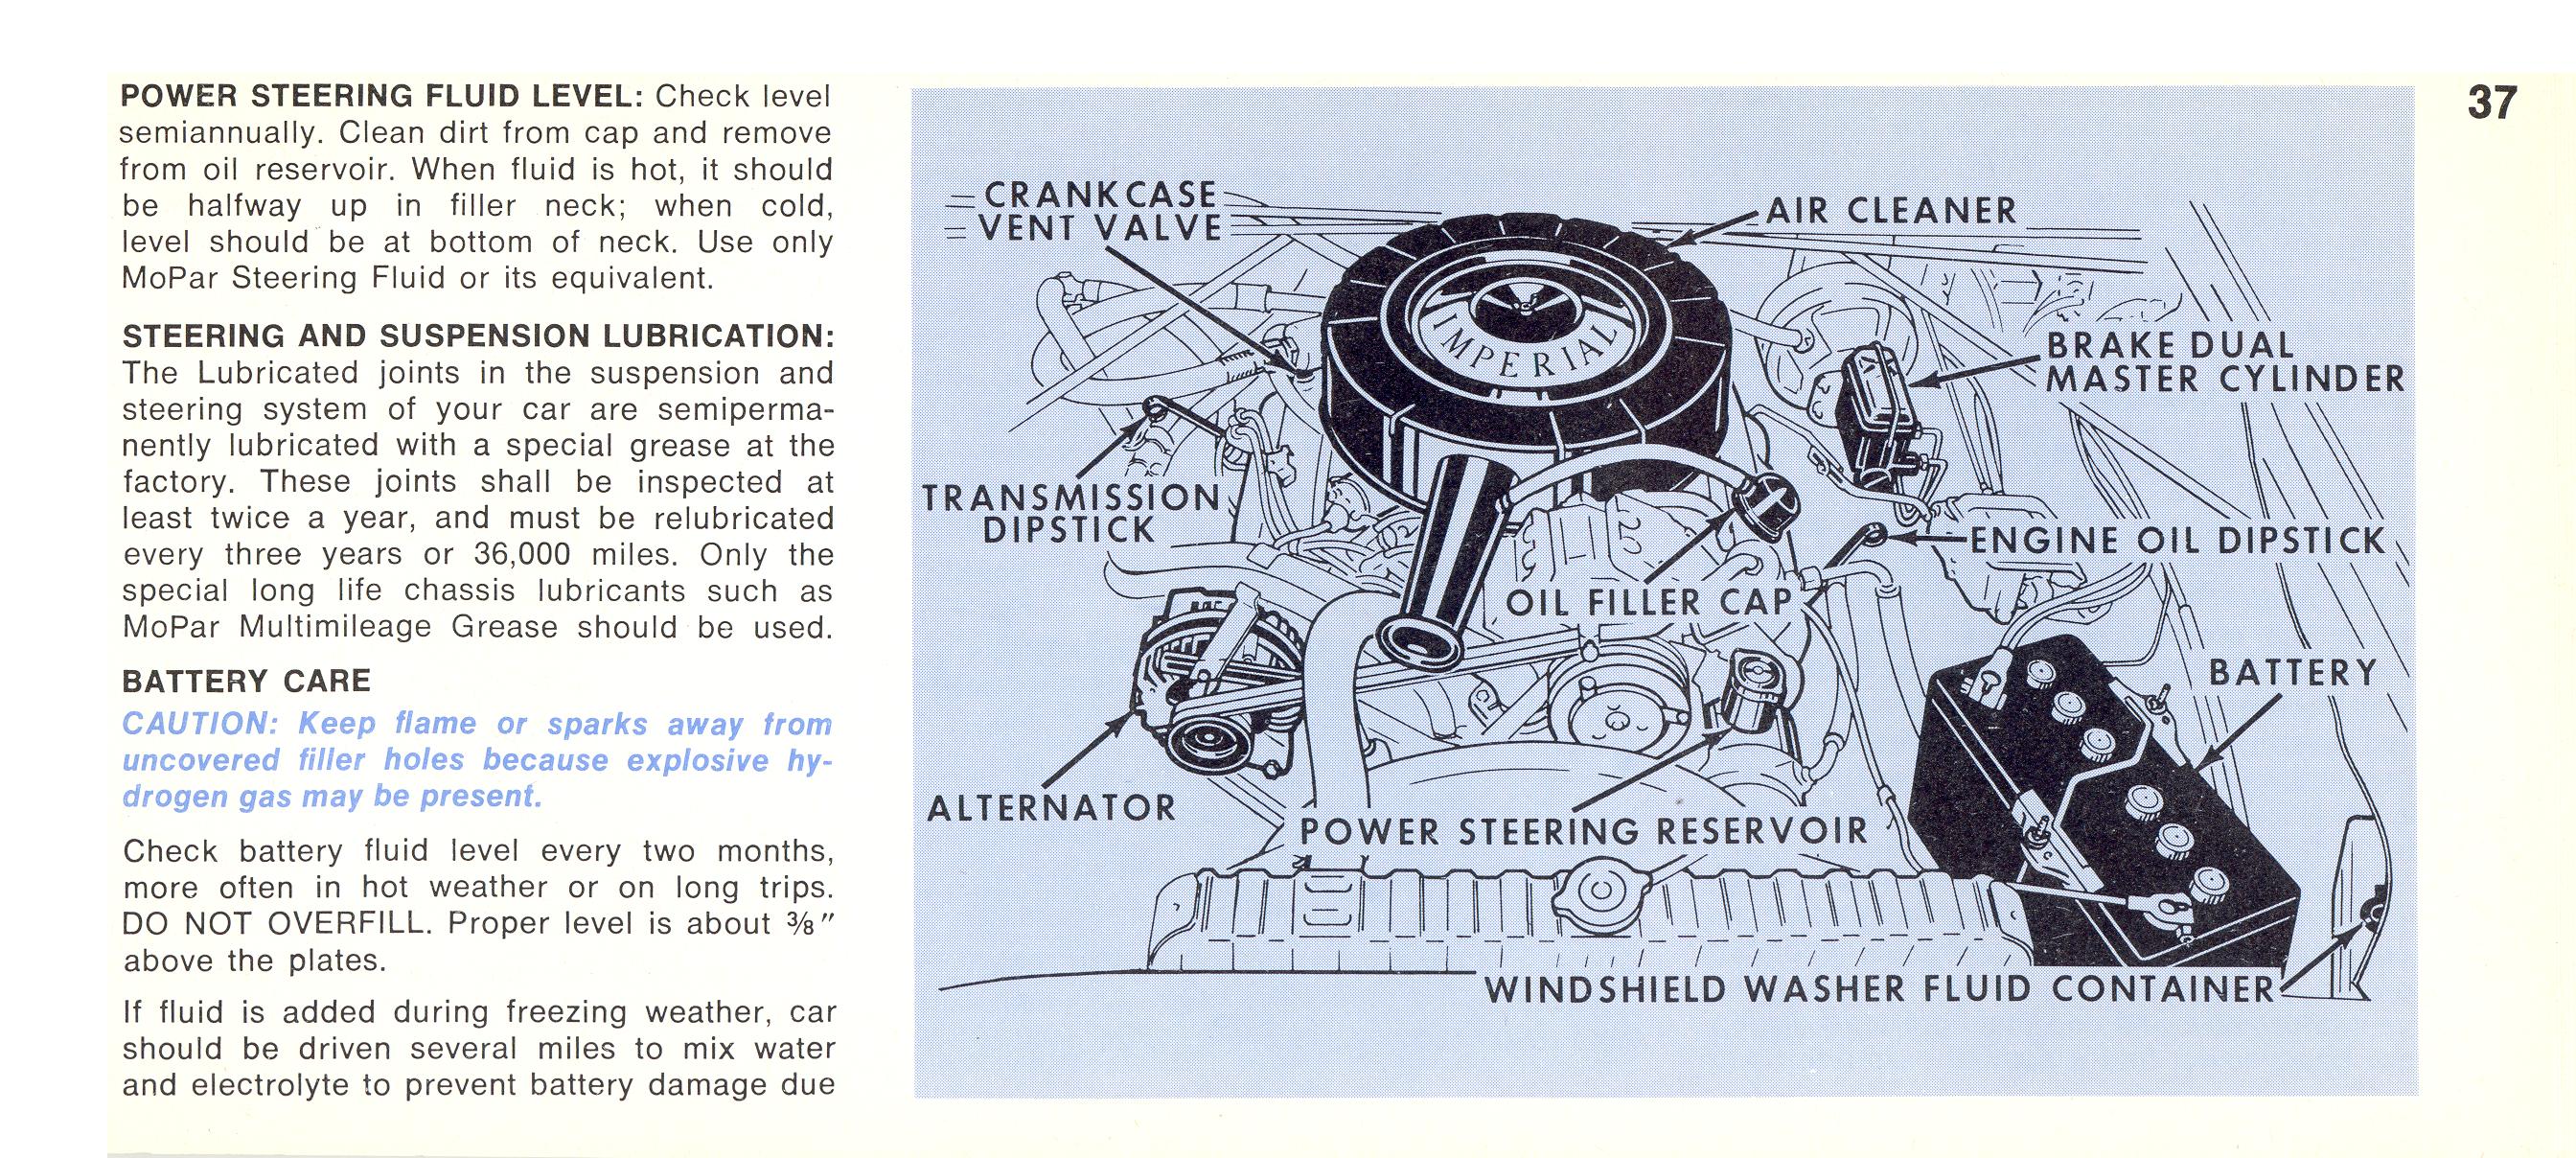 1968 Imperial Manual-37